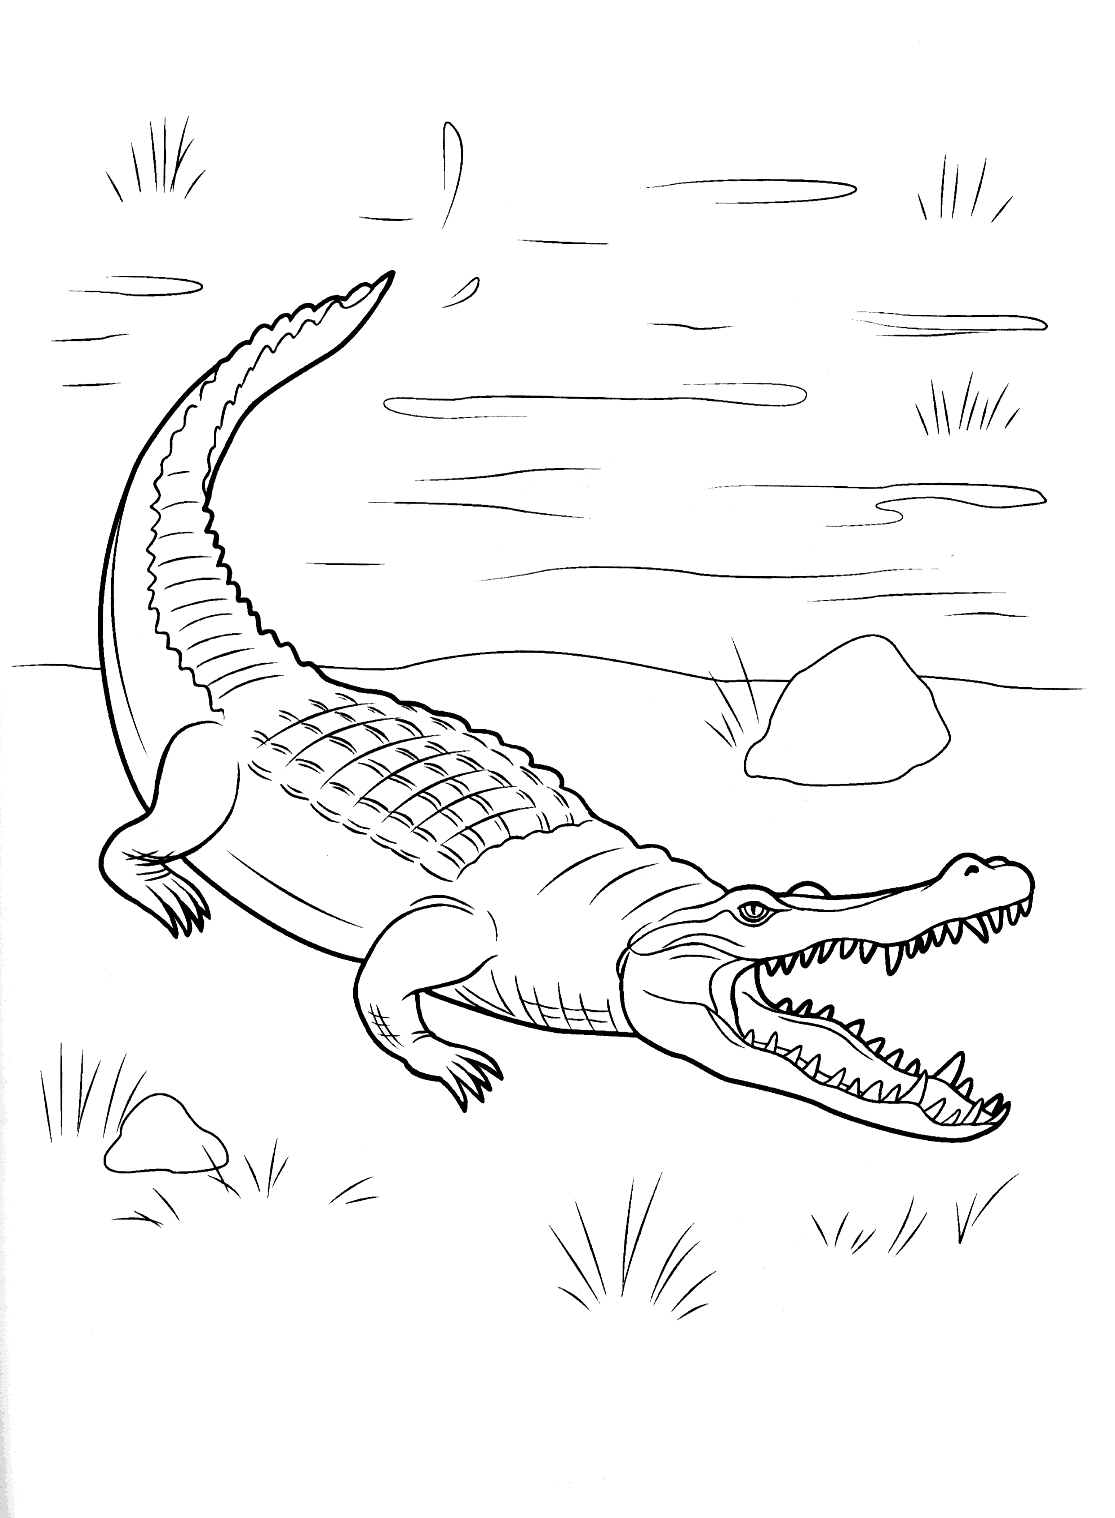 Coloring page - Crocodile has come onshore